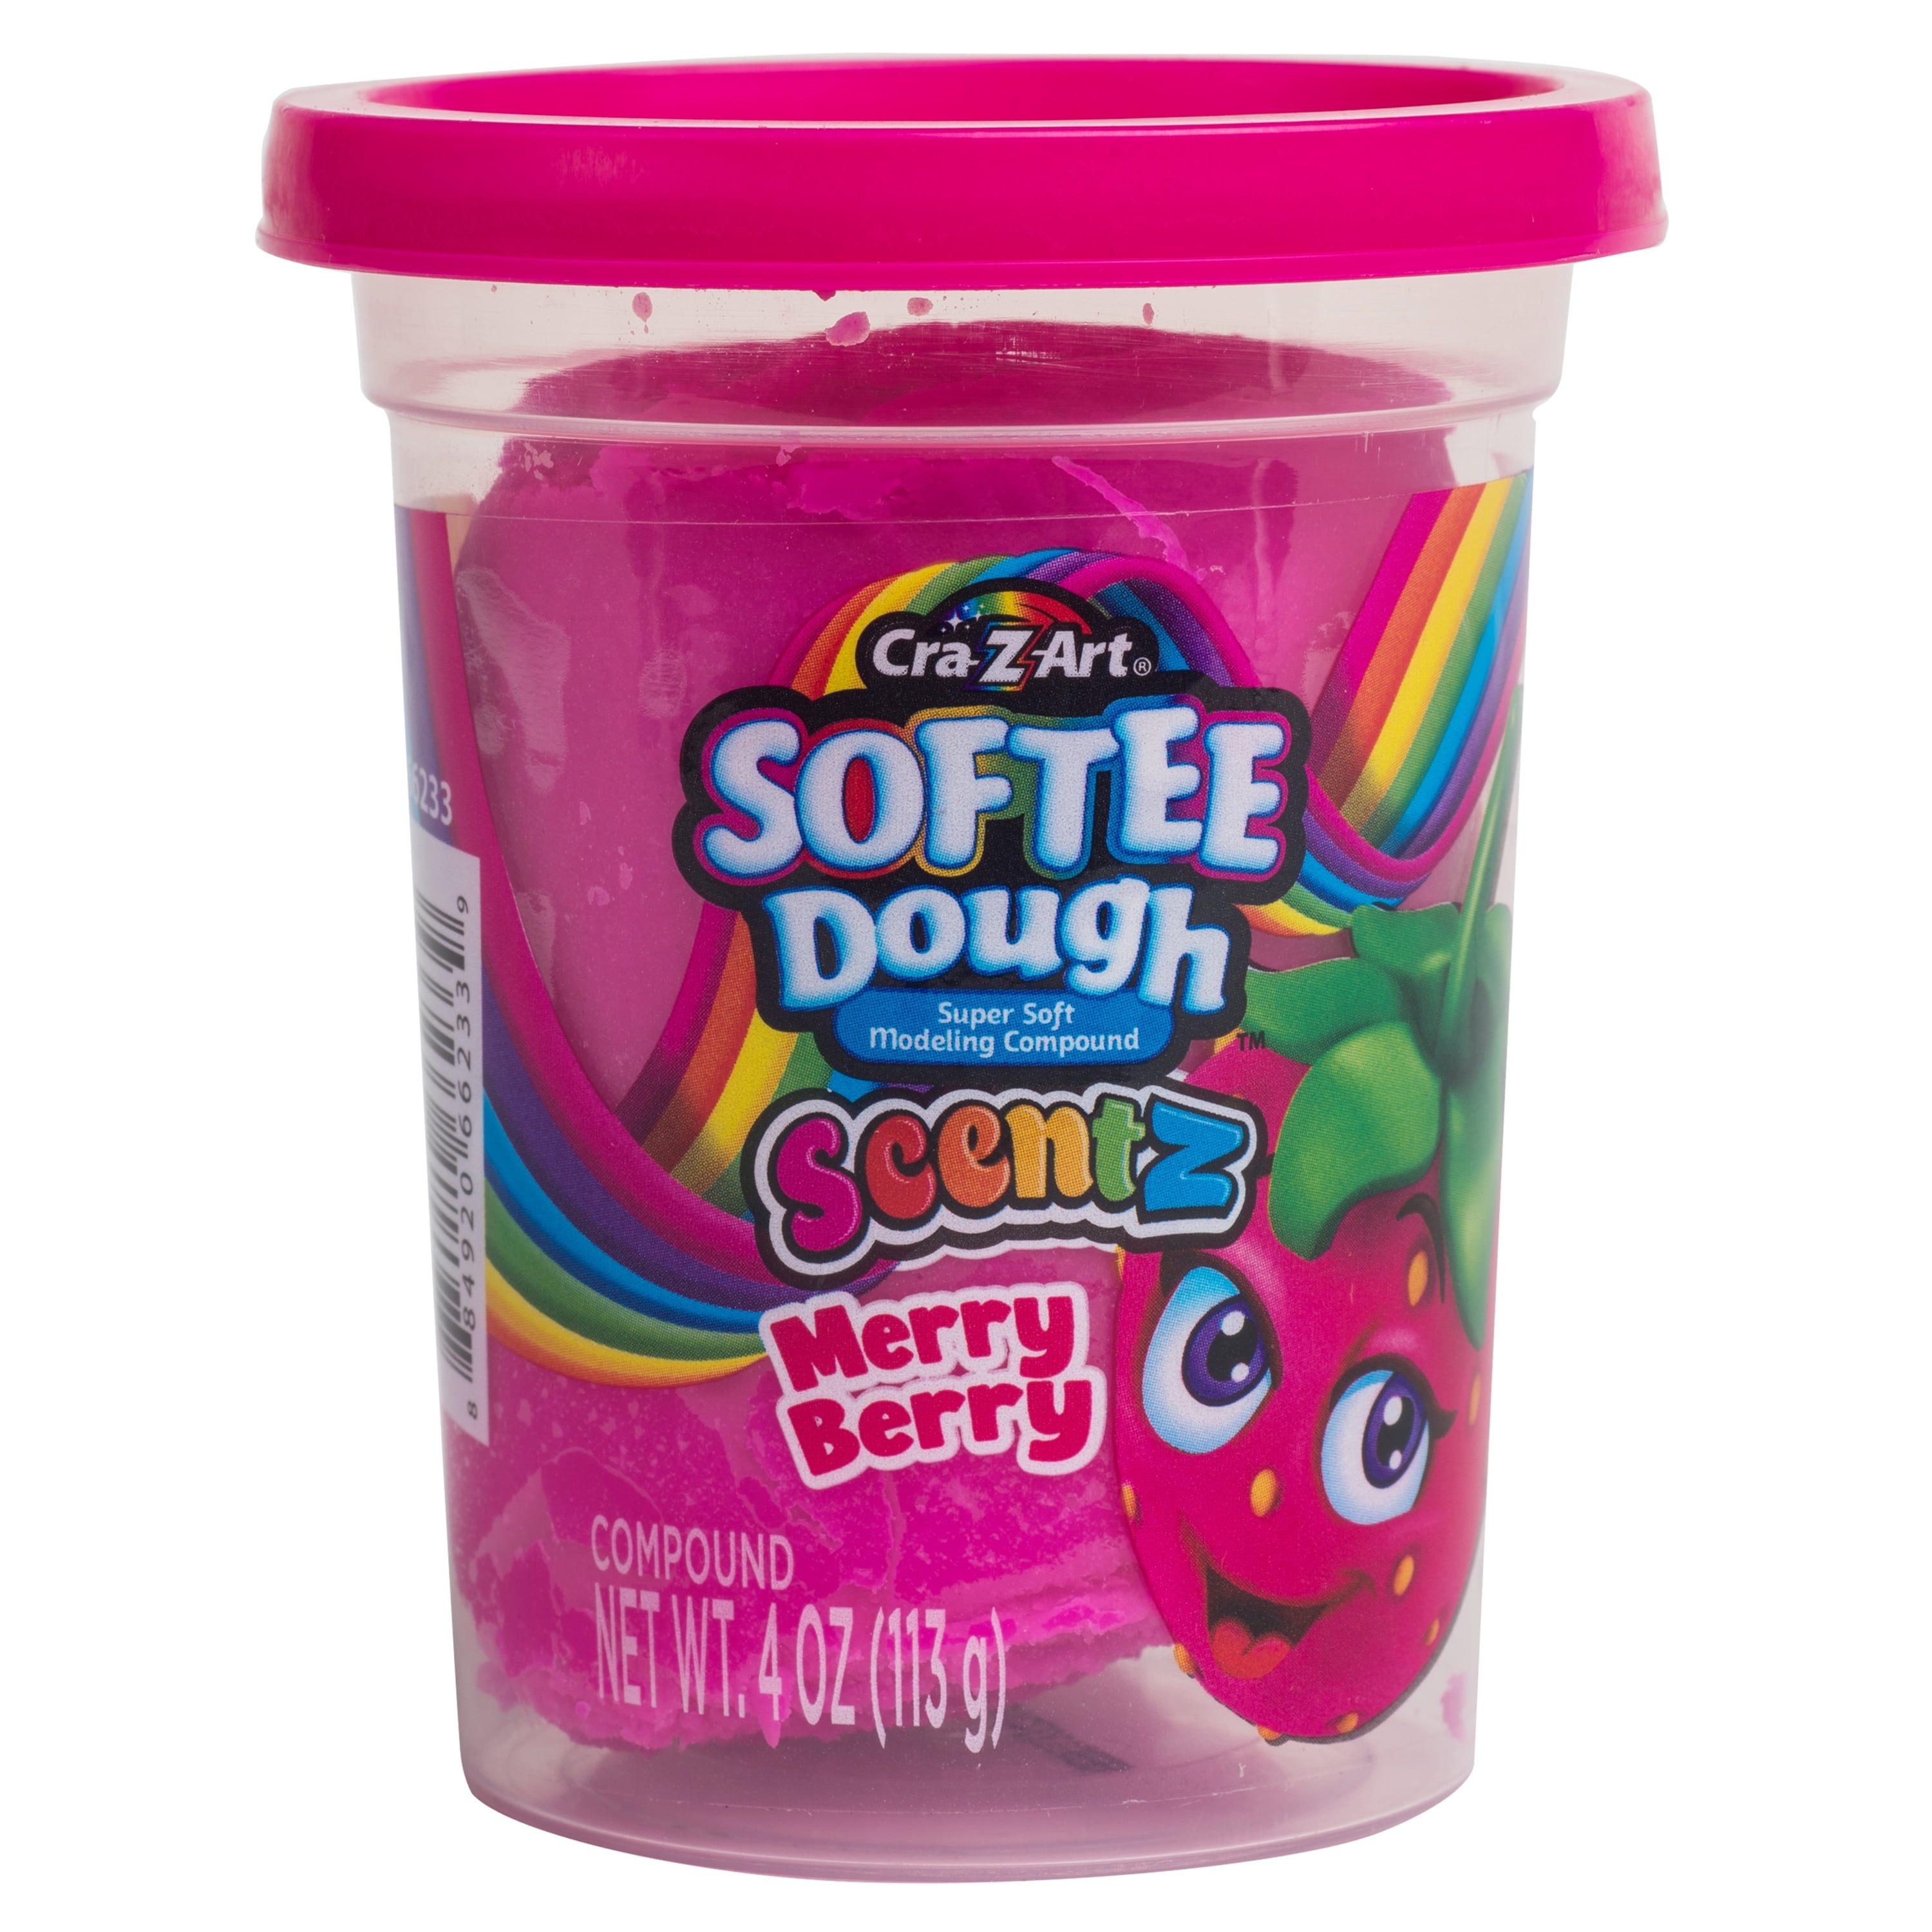 Cra-Z-Art Softee Dough Pink Scented Merry Berry Dough